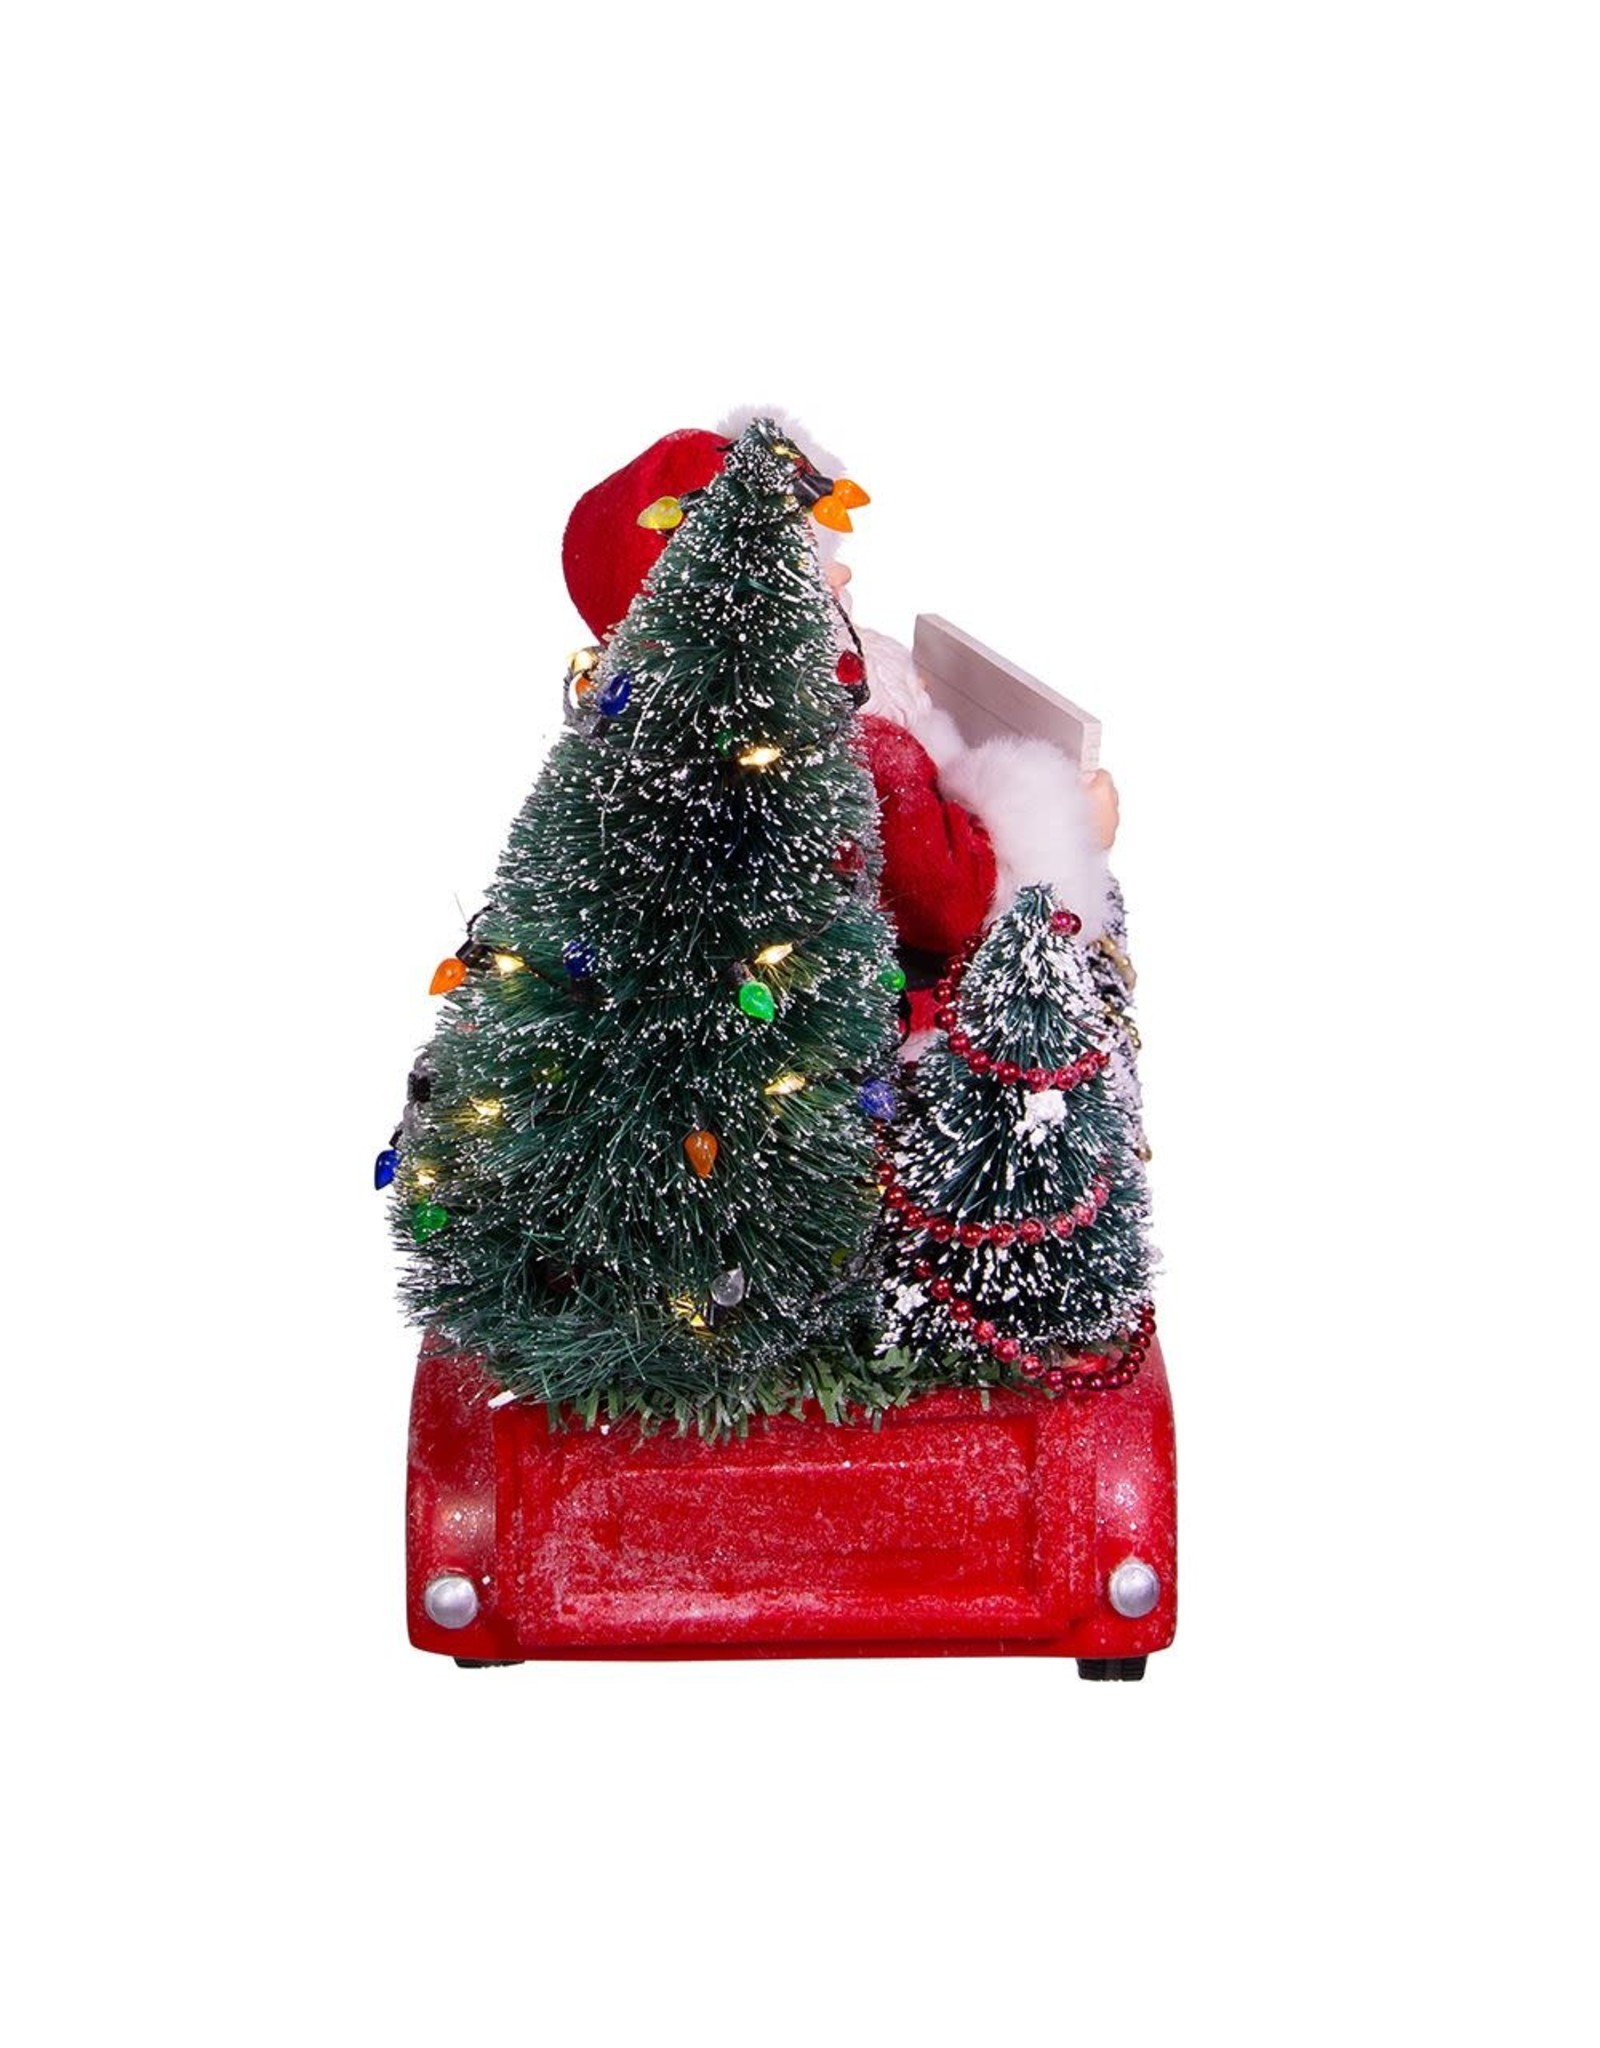 Kurt Adler Fabriche Santa Pick Up Truck W Light Up Trees Table Piece